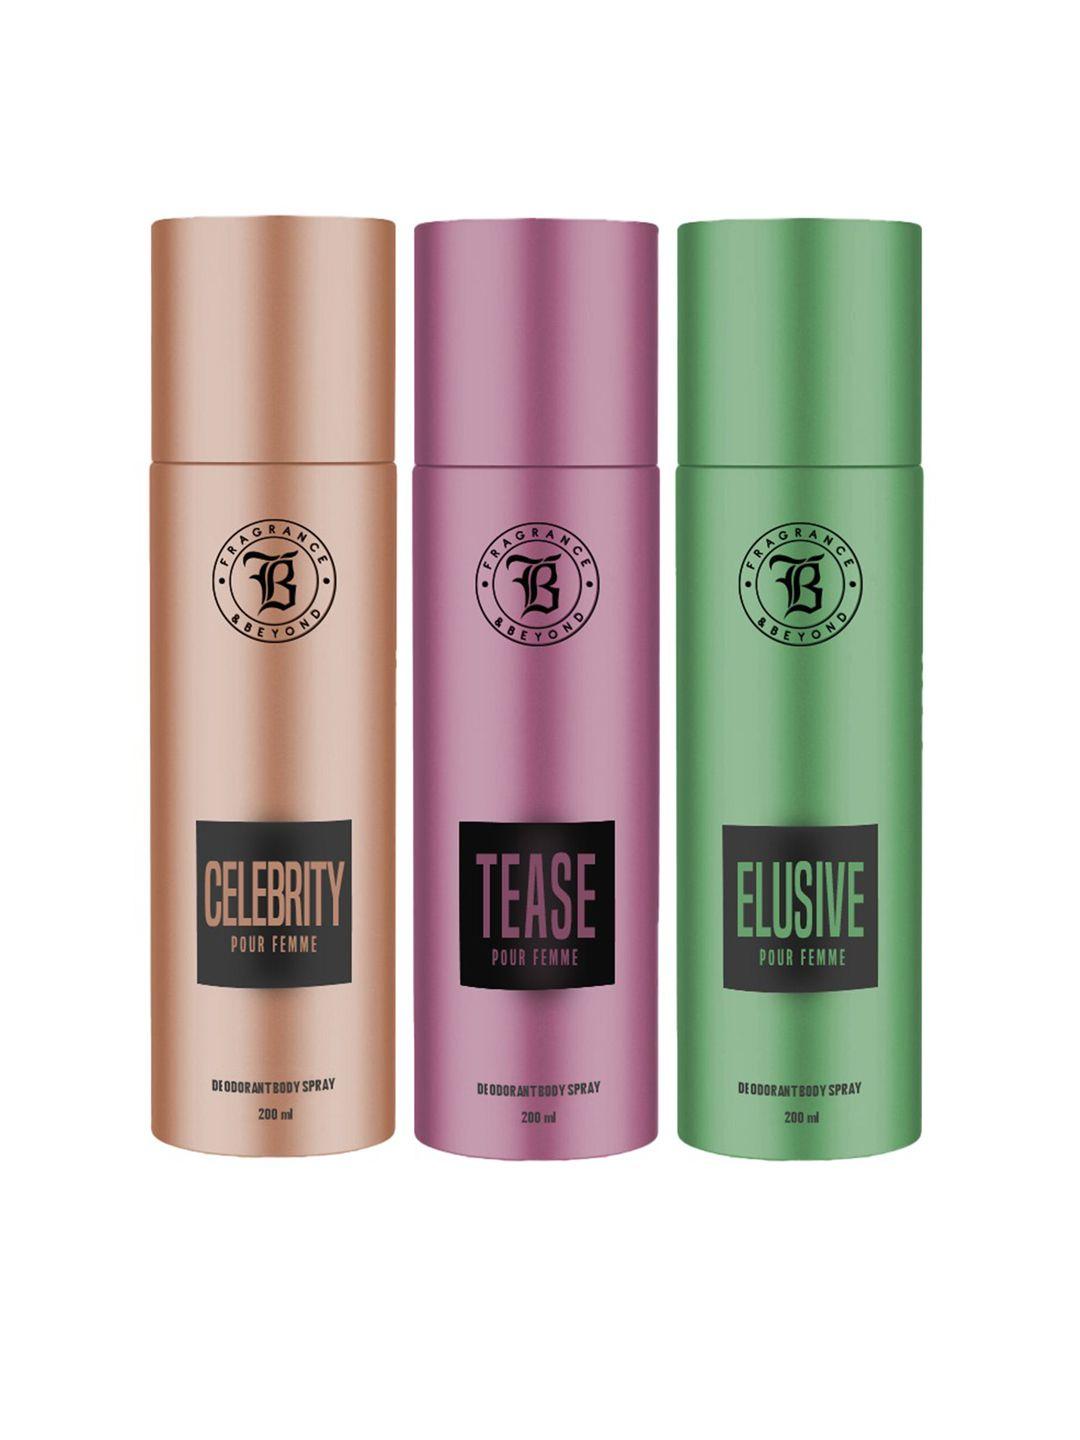 fragrance & beyond women set of 3 deodorants 200 ml each - celebrity, tease & elusive